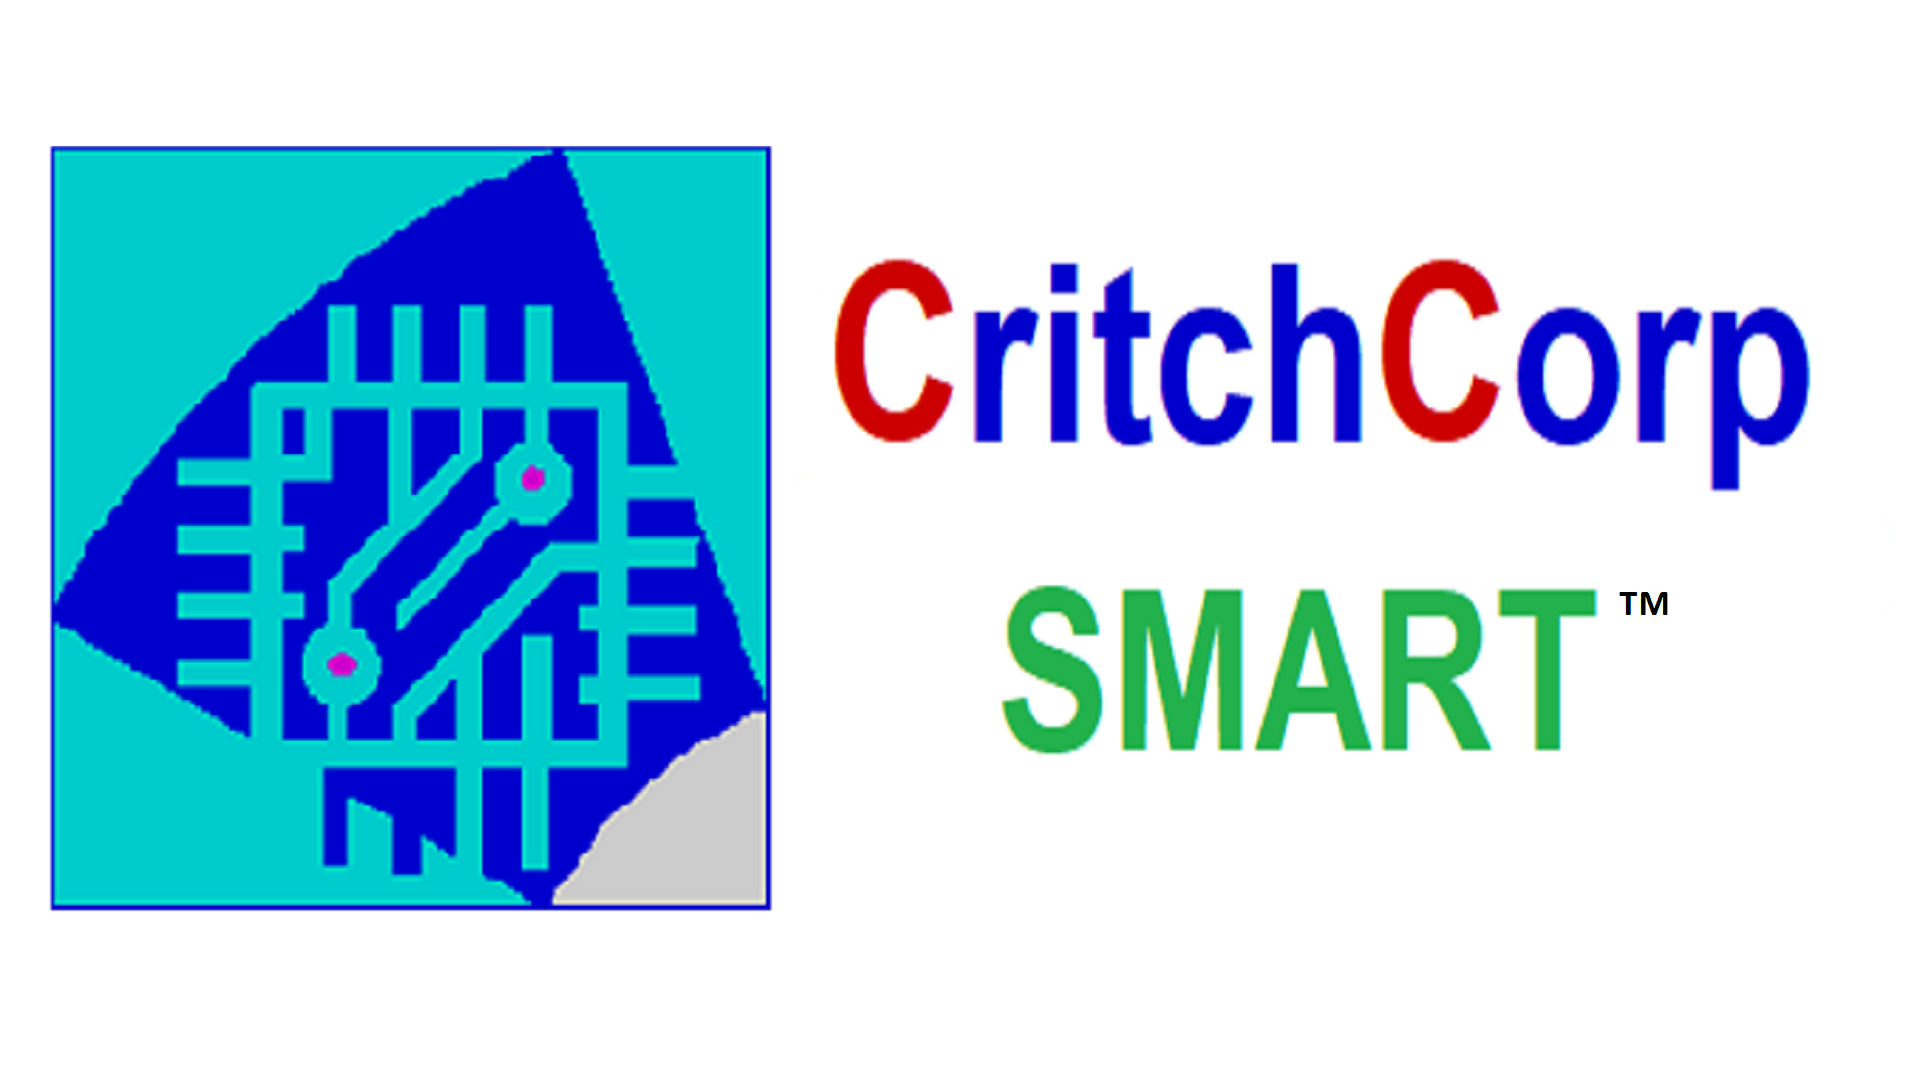 CritchCorp Smart™ Logo